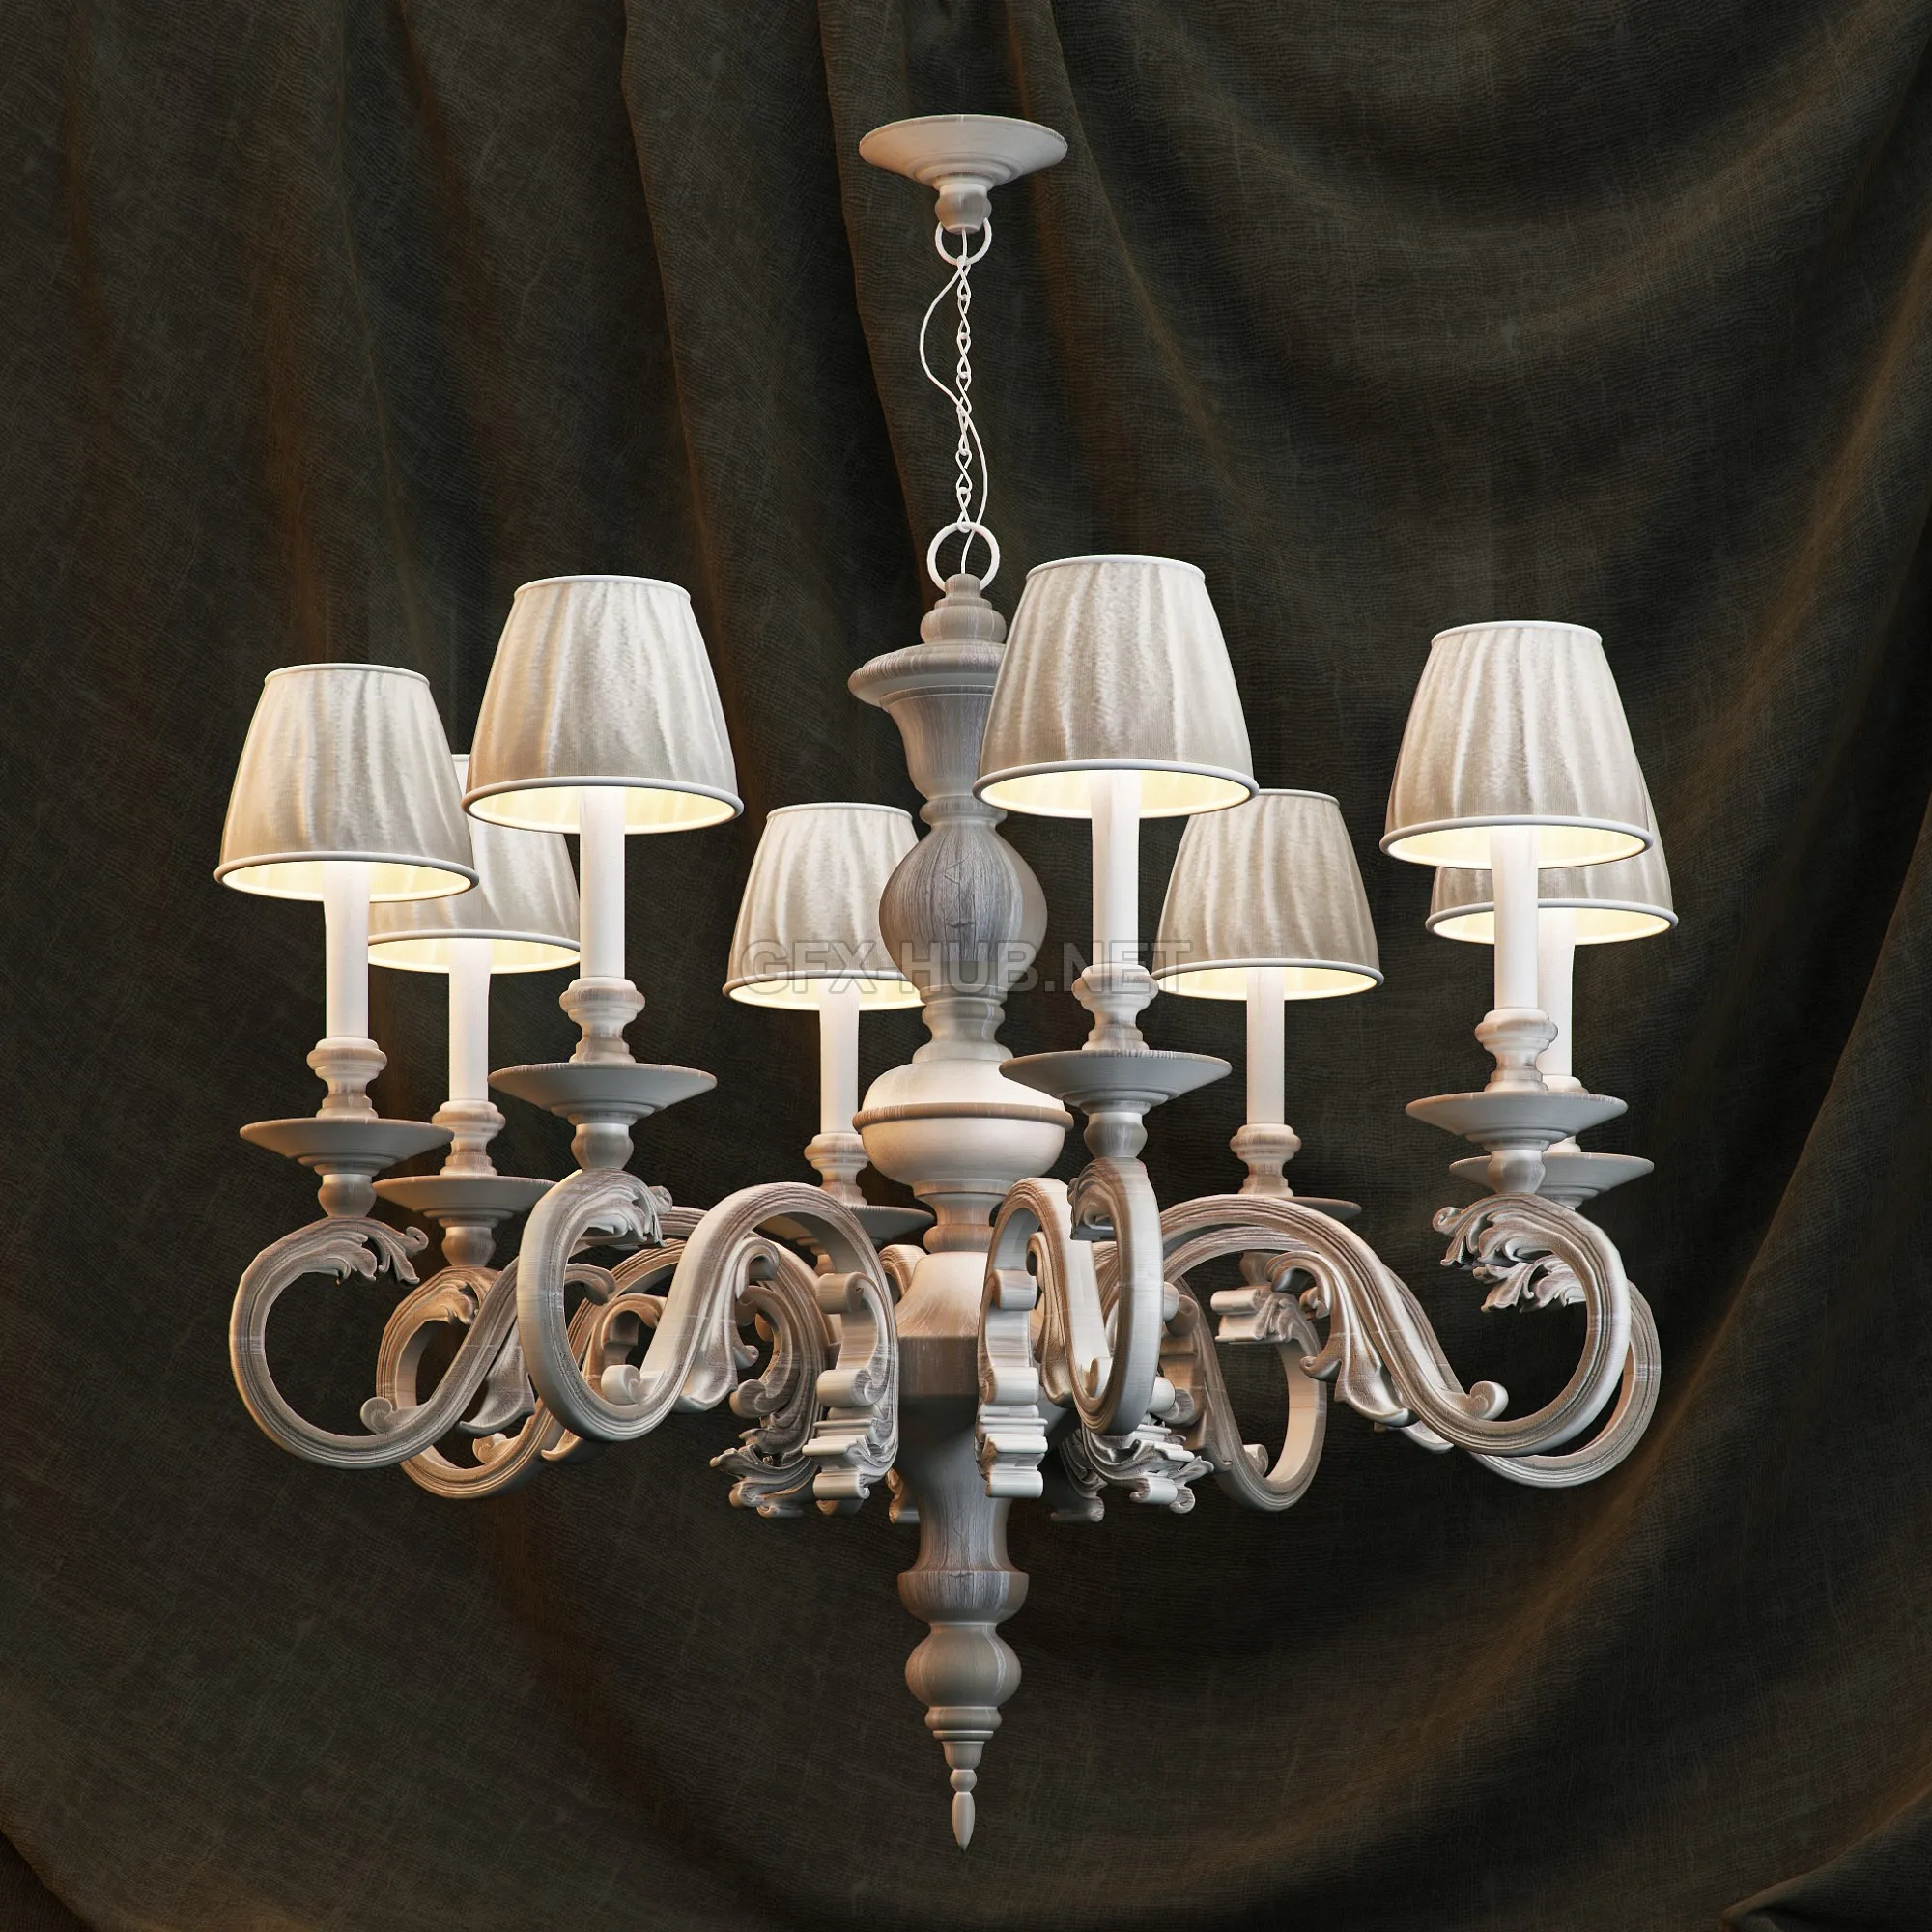 FURNITURE 3D MODELS – Judeco ceiling lamp